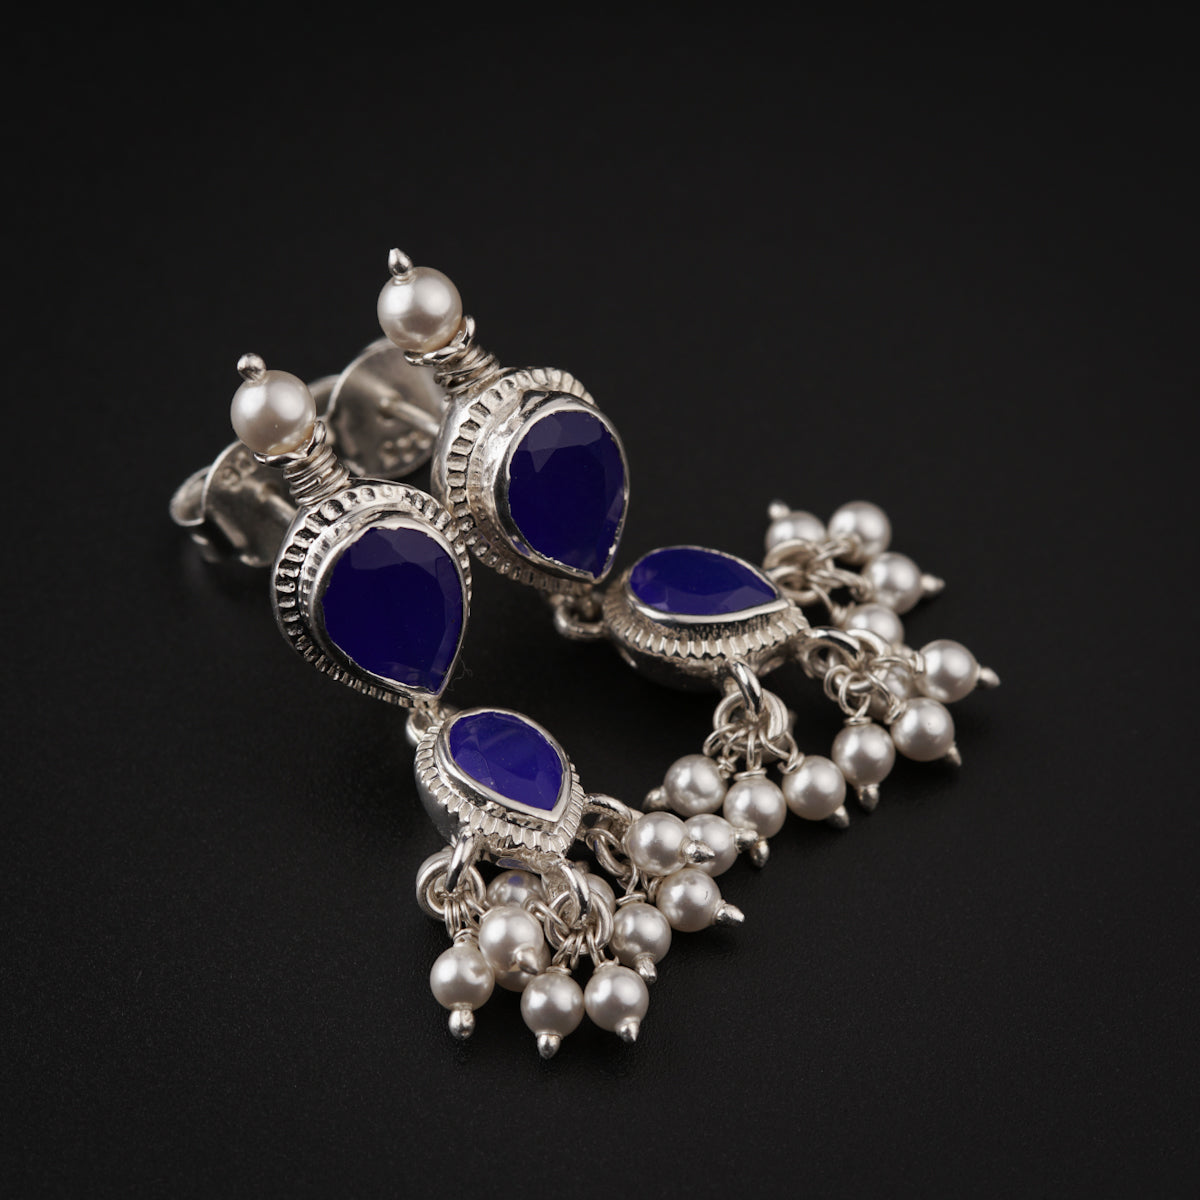 Lapis Lazuli Tanmani Set with Pearls